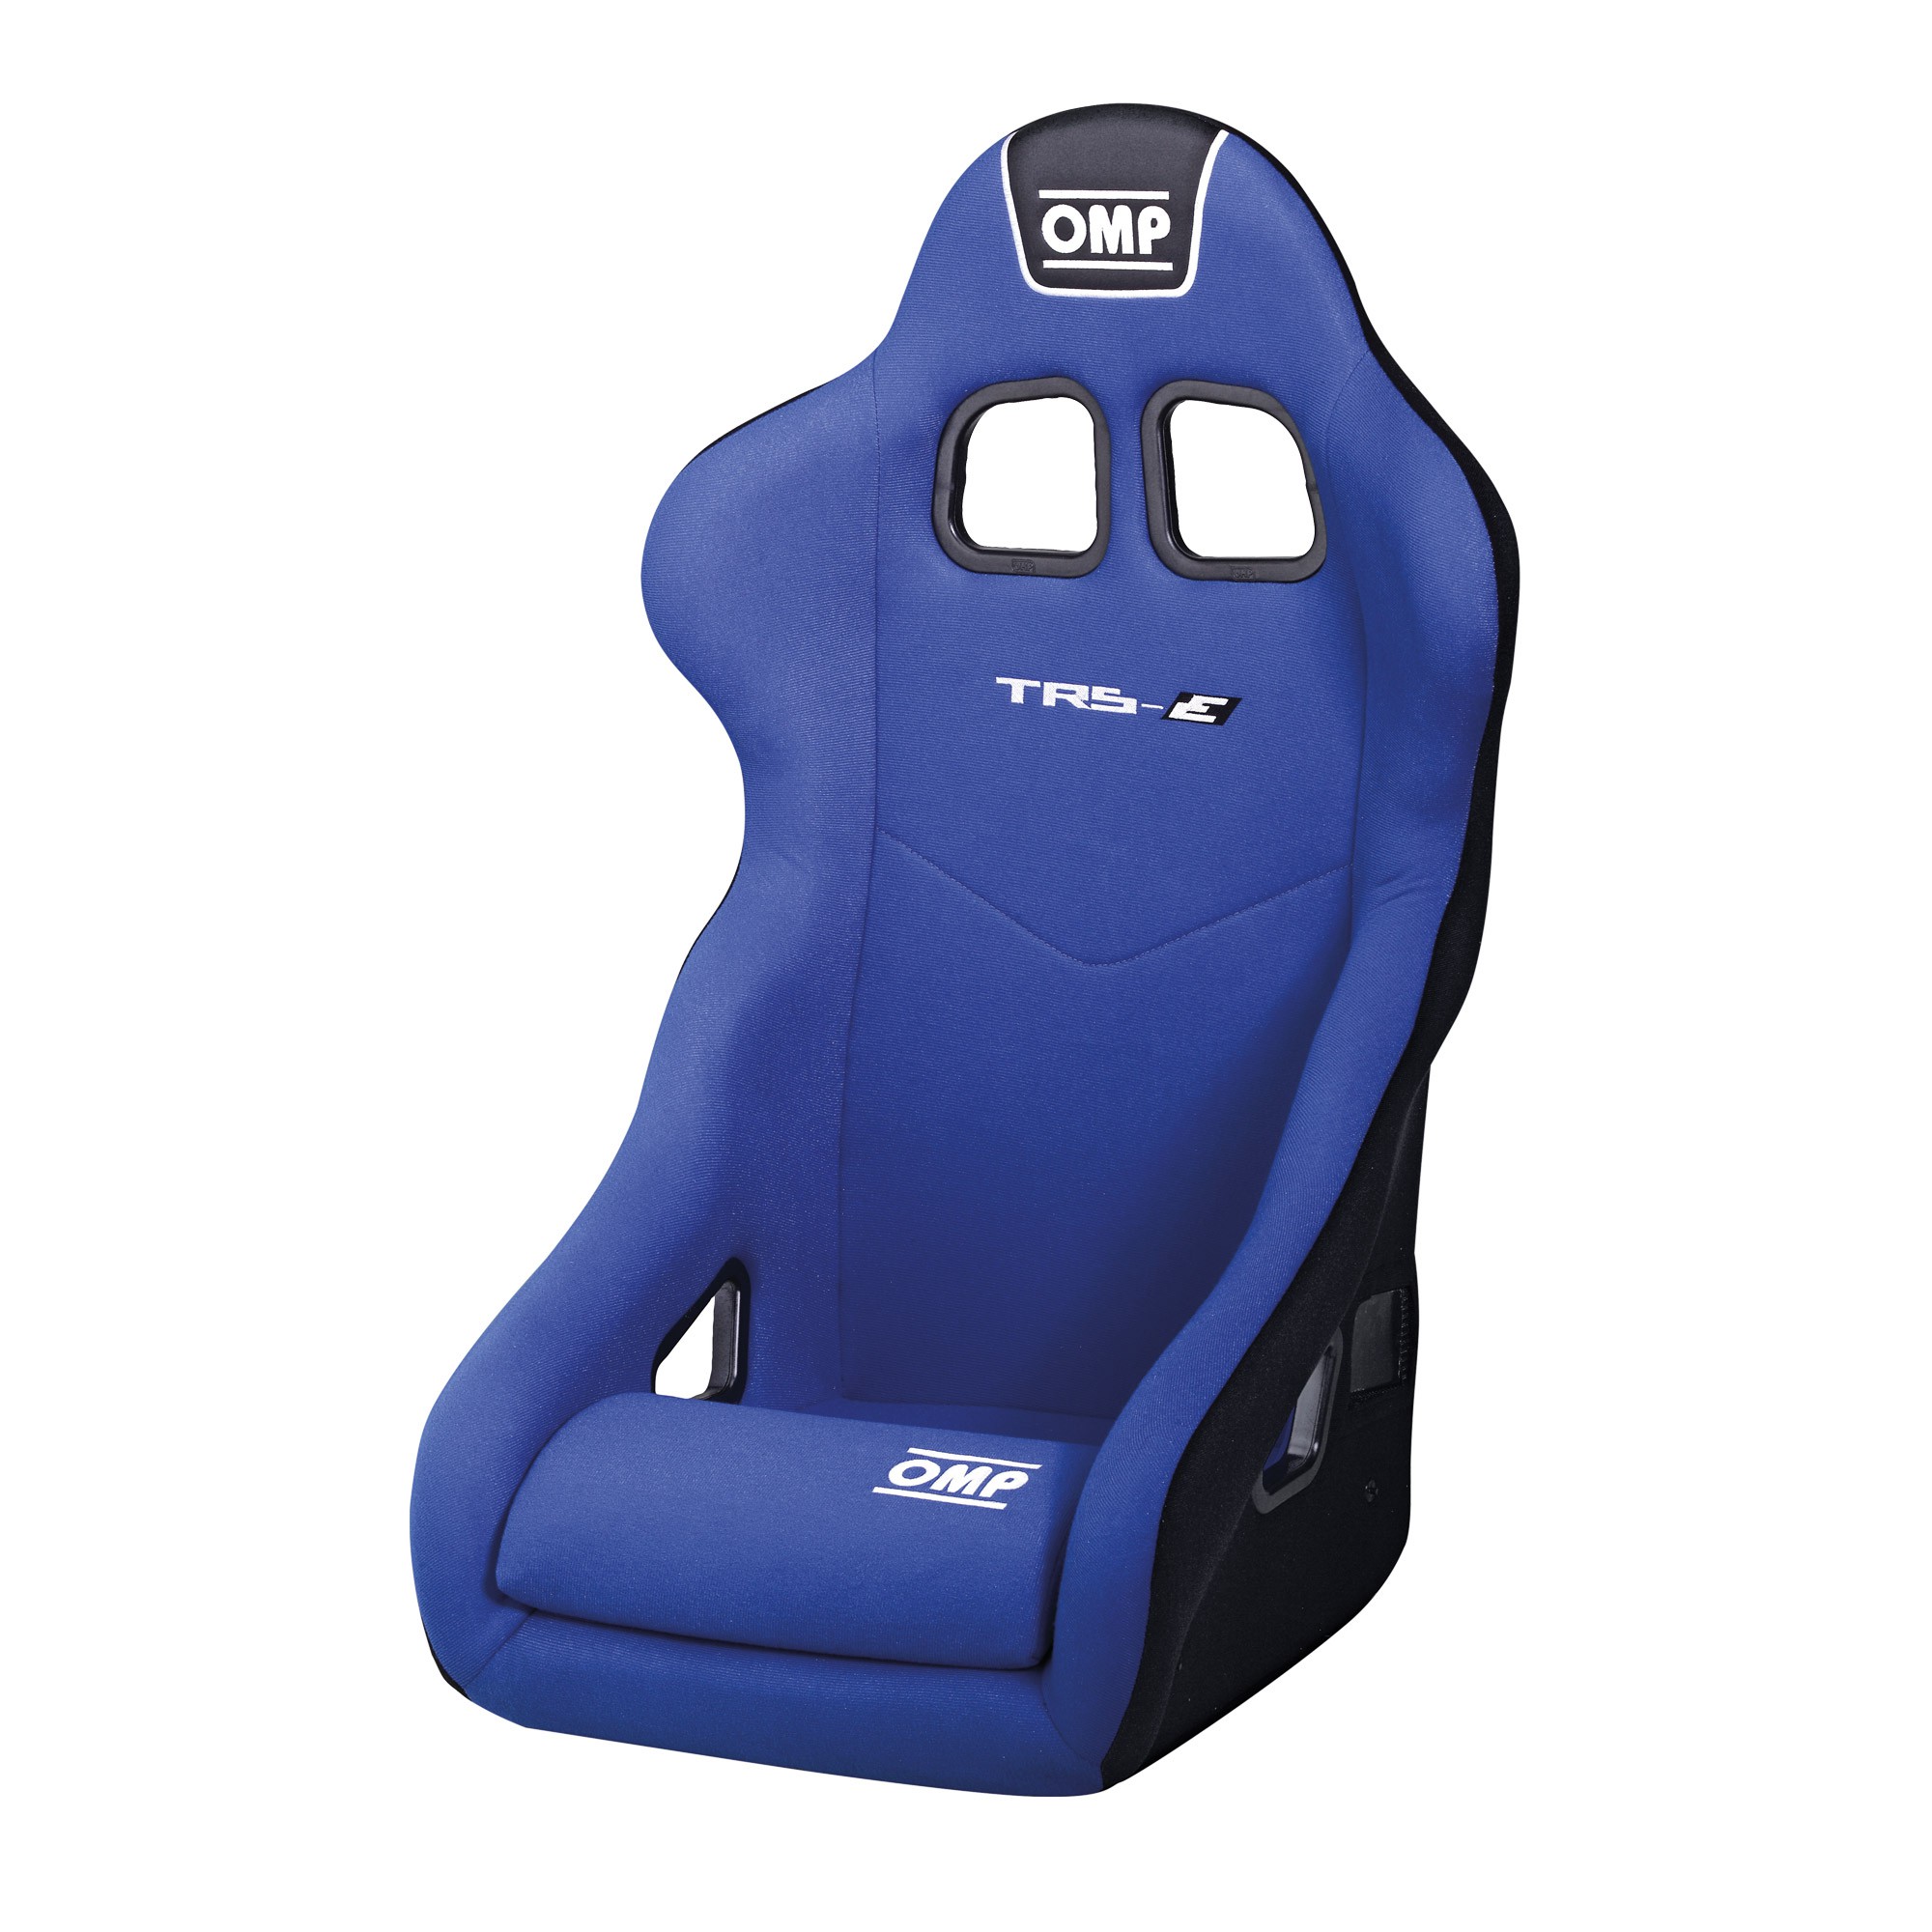 Tubular racing seat - TRS-E